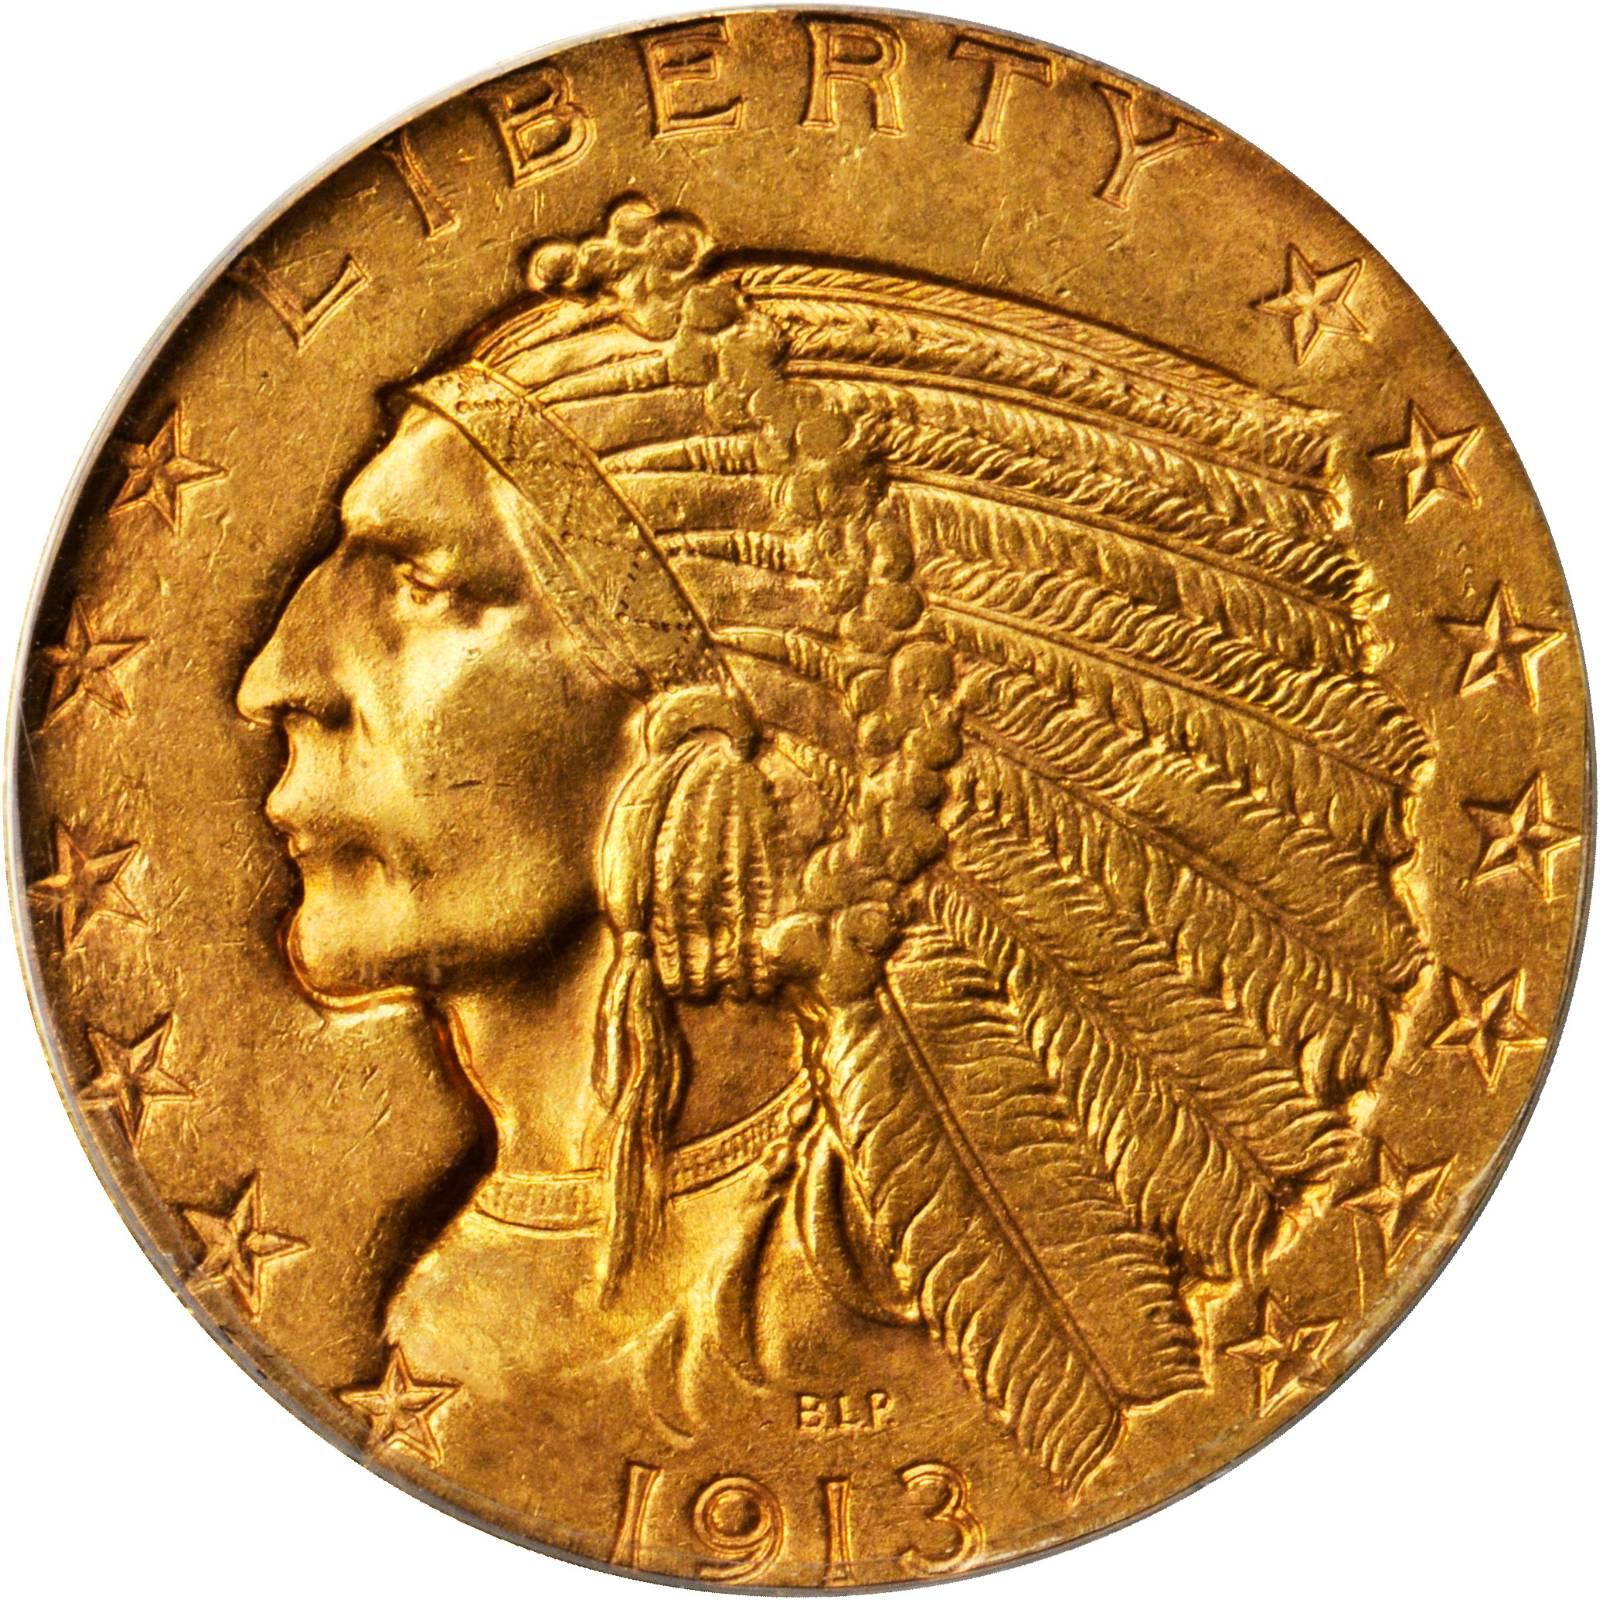 https://coinappraiser.com/wp-content/uploads/2017/03/1913-indian-half-eagle-s-o.jpeg